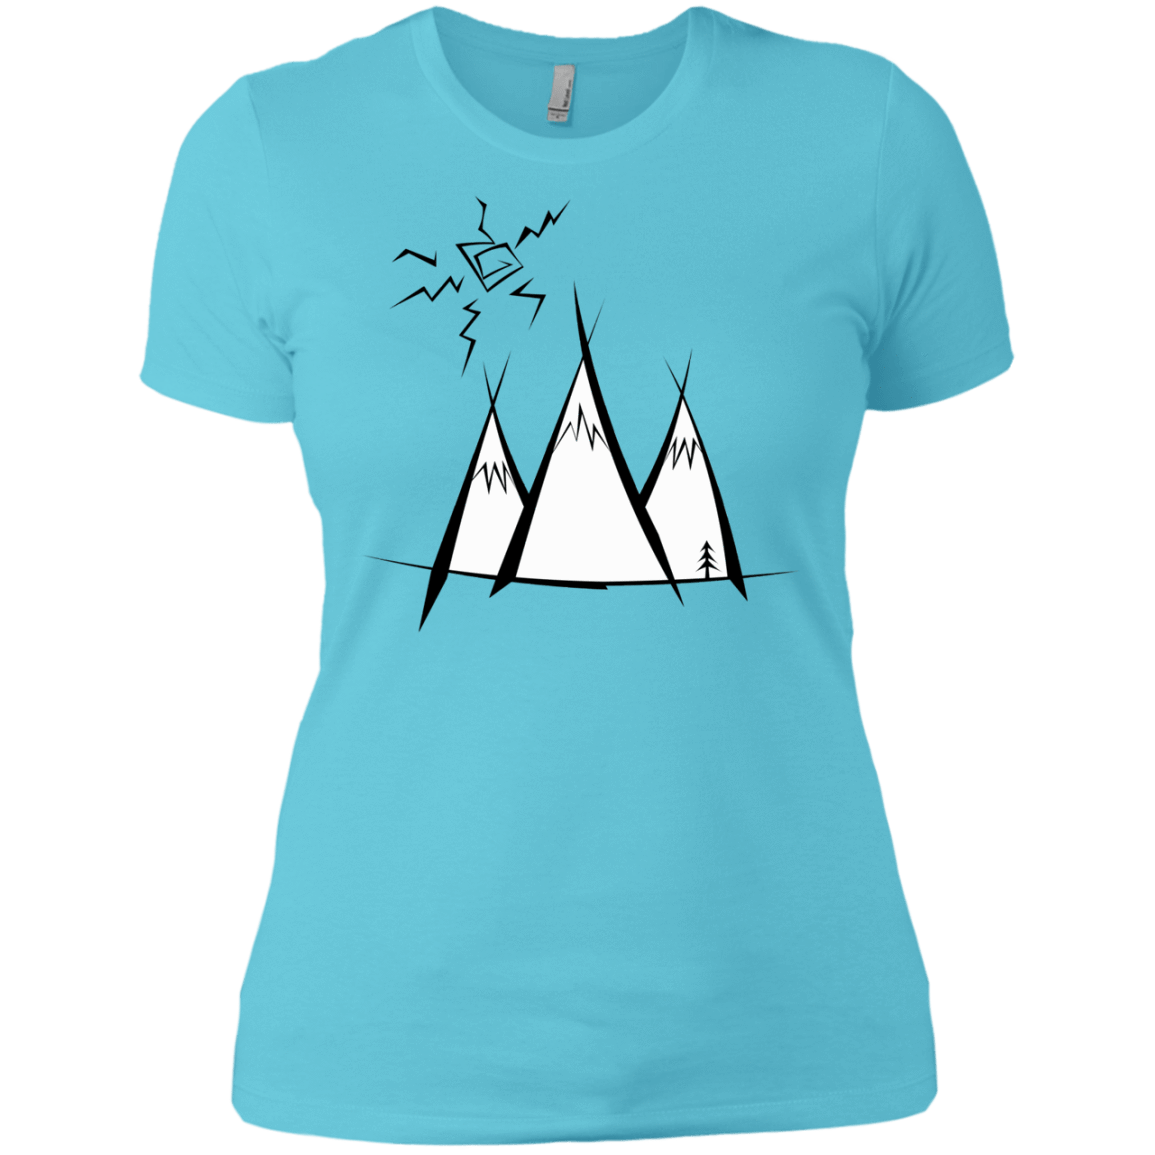 T-Shirts Cancun / X-Small Sunny Mountains Women's Premium T-Shirt